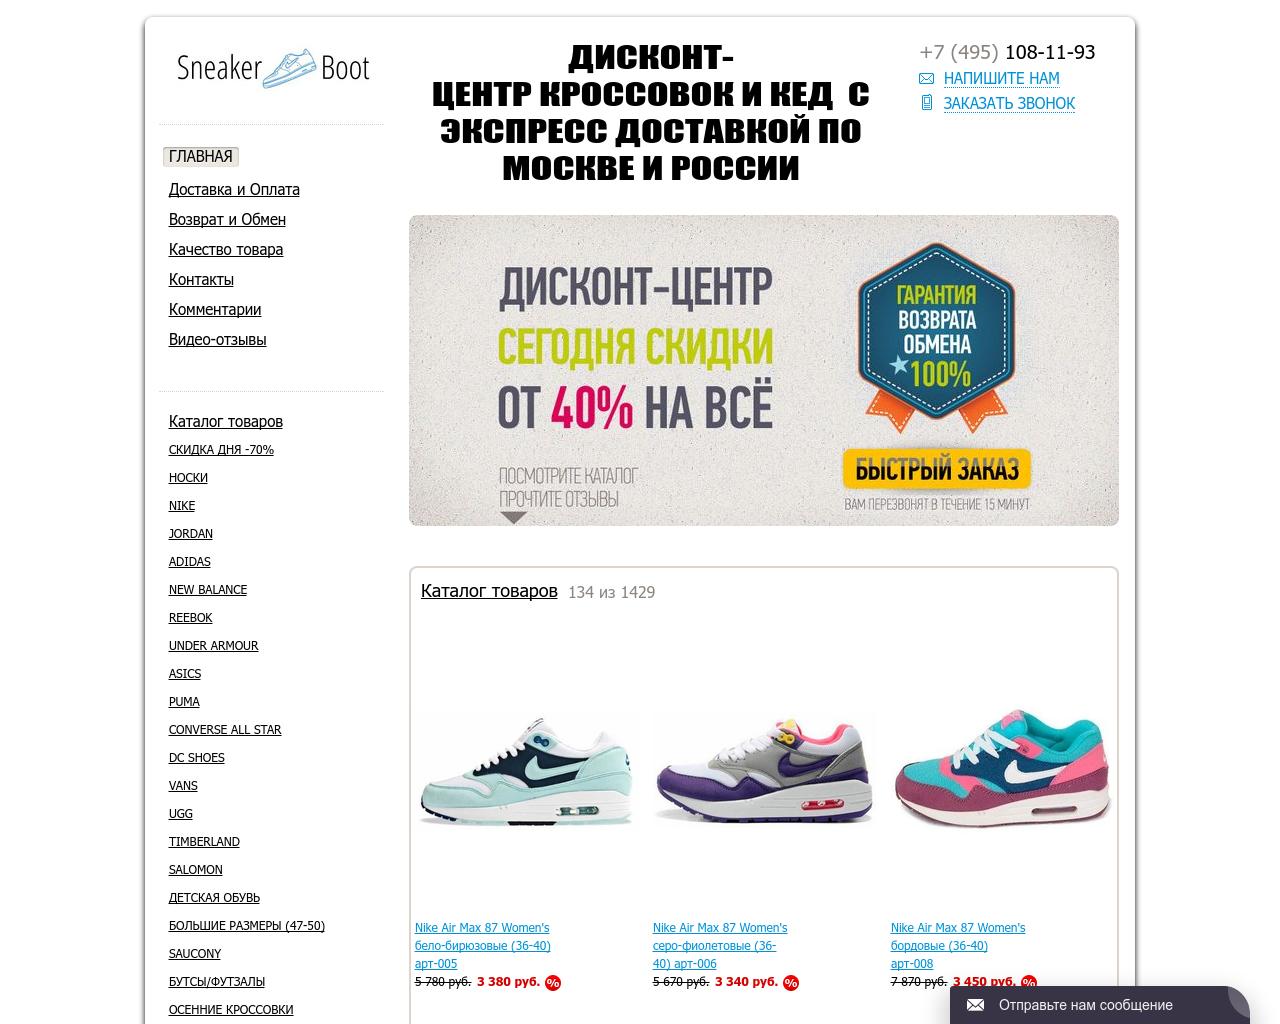 Изображение сайта sneaker-boot.ru в разрешении 1280x1024